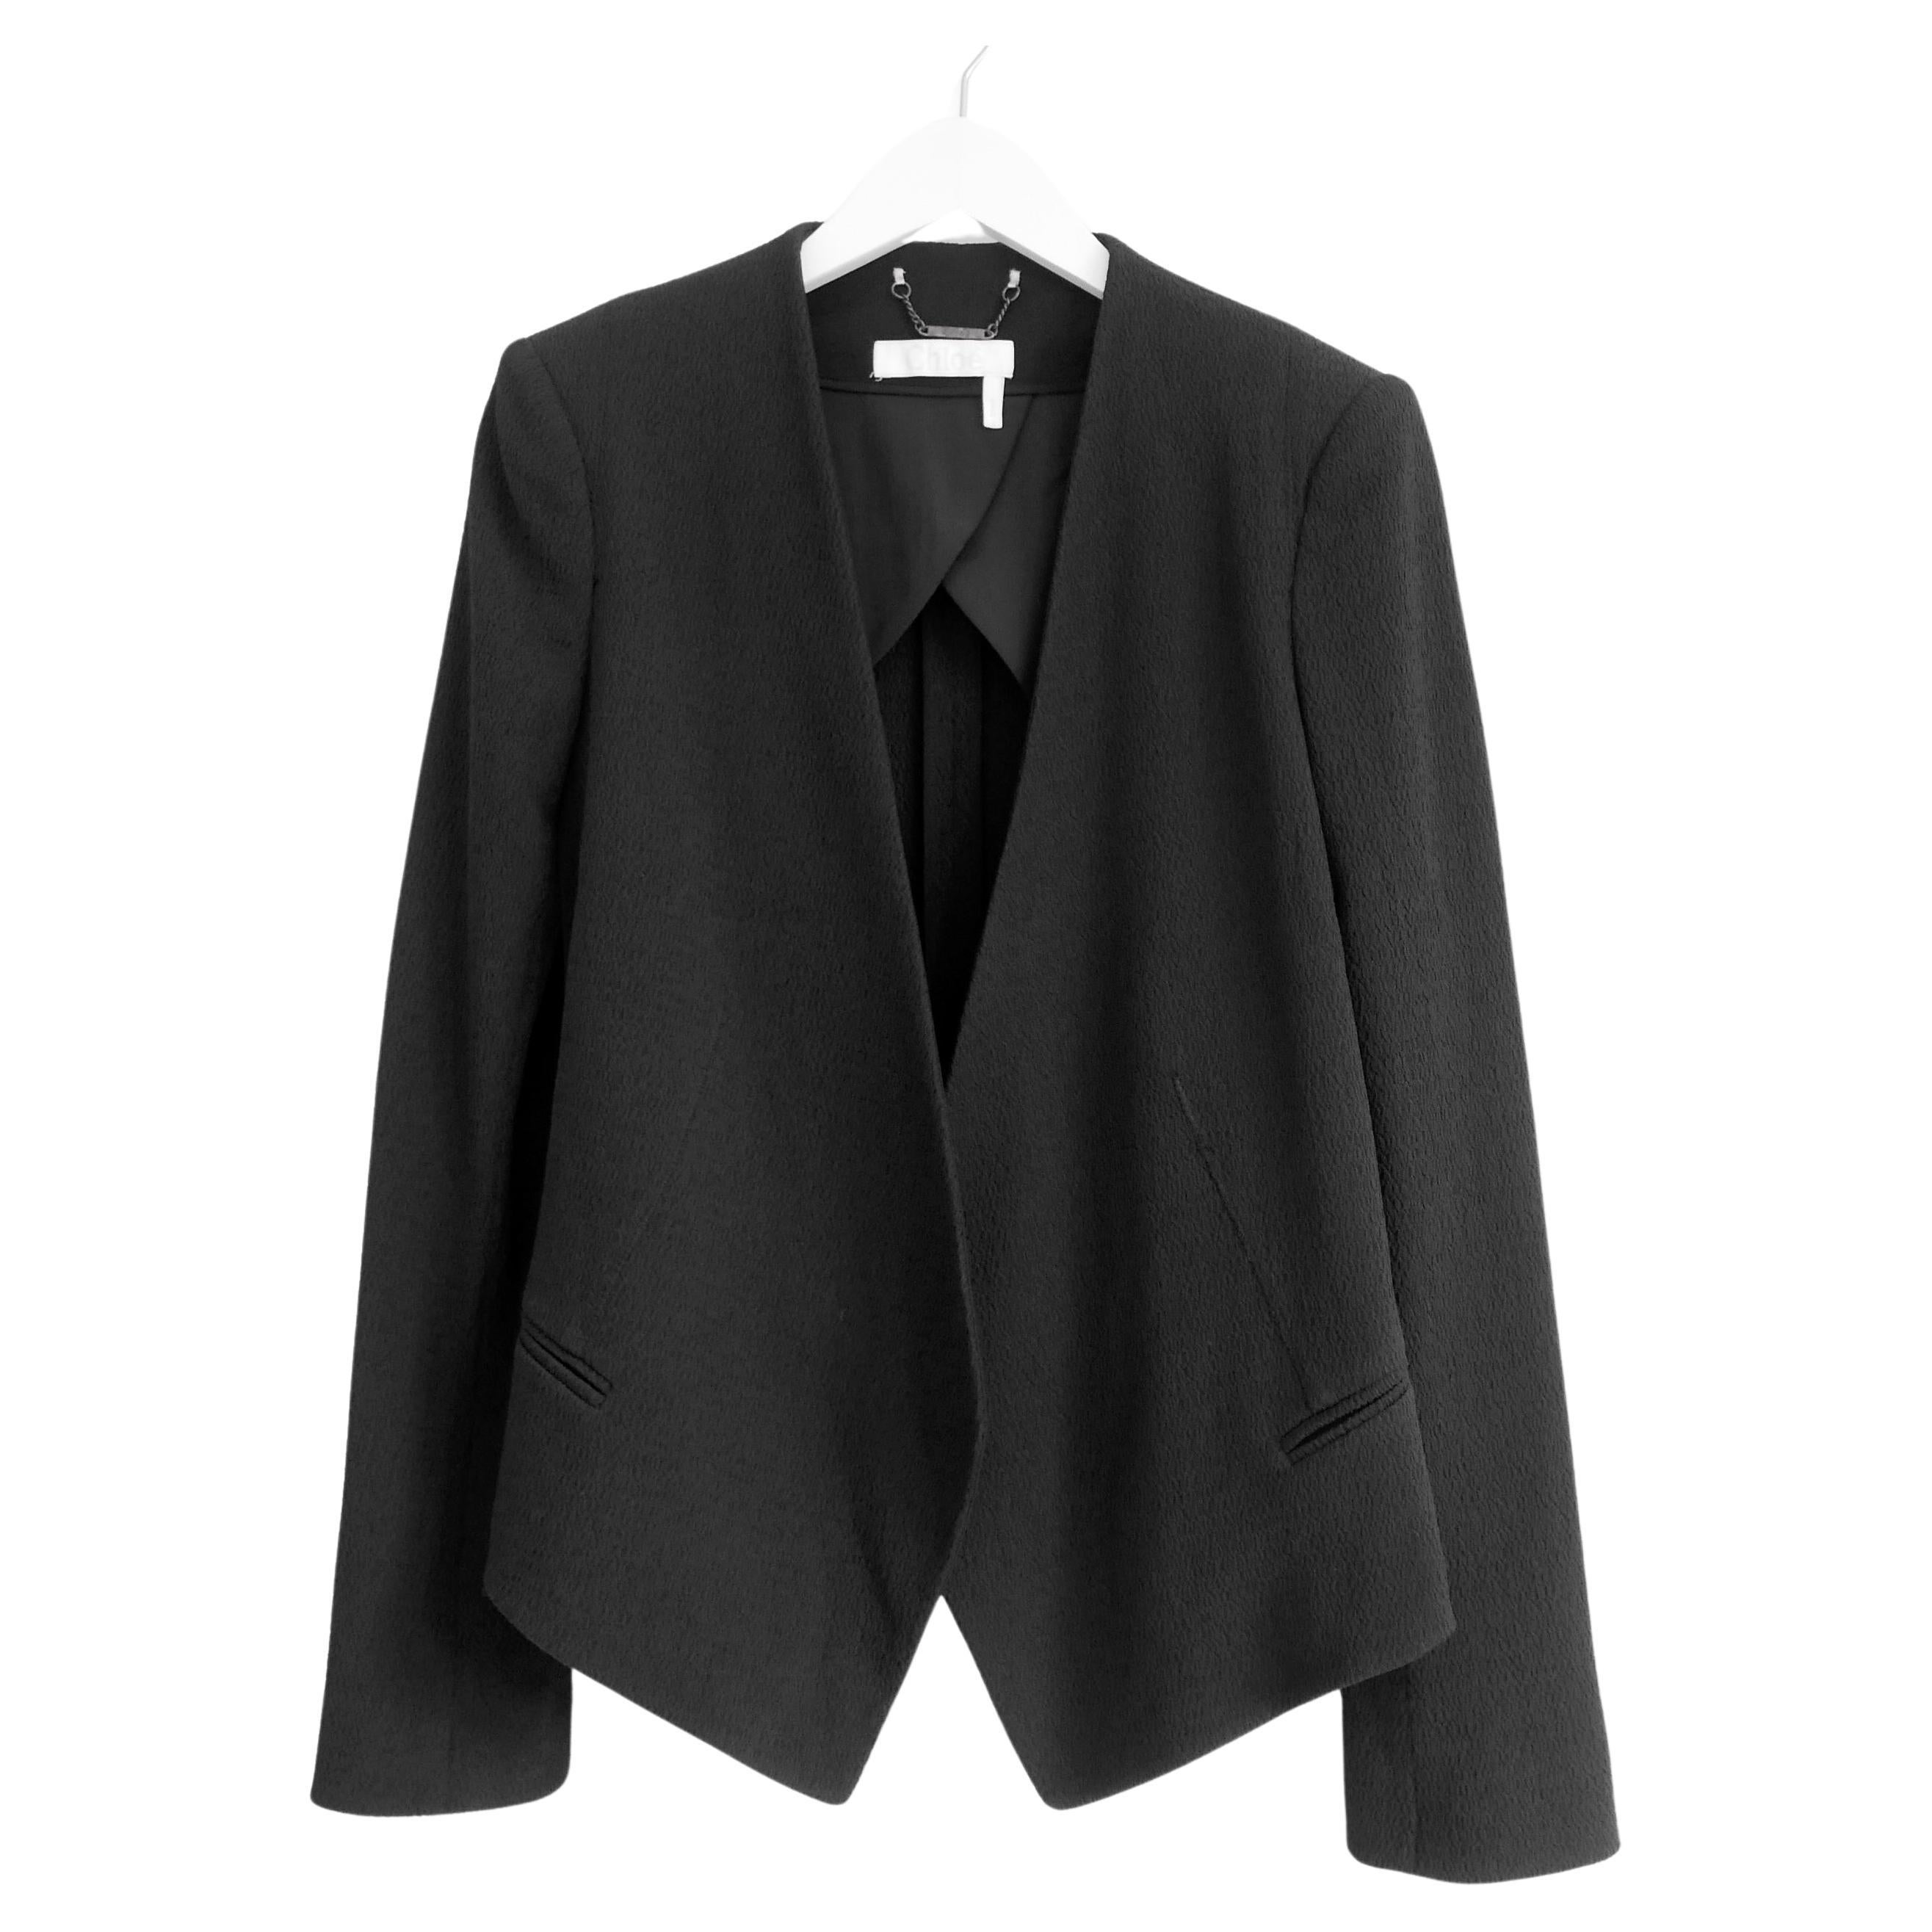 Chloe black textured tuxedo inspired jacket blazer